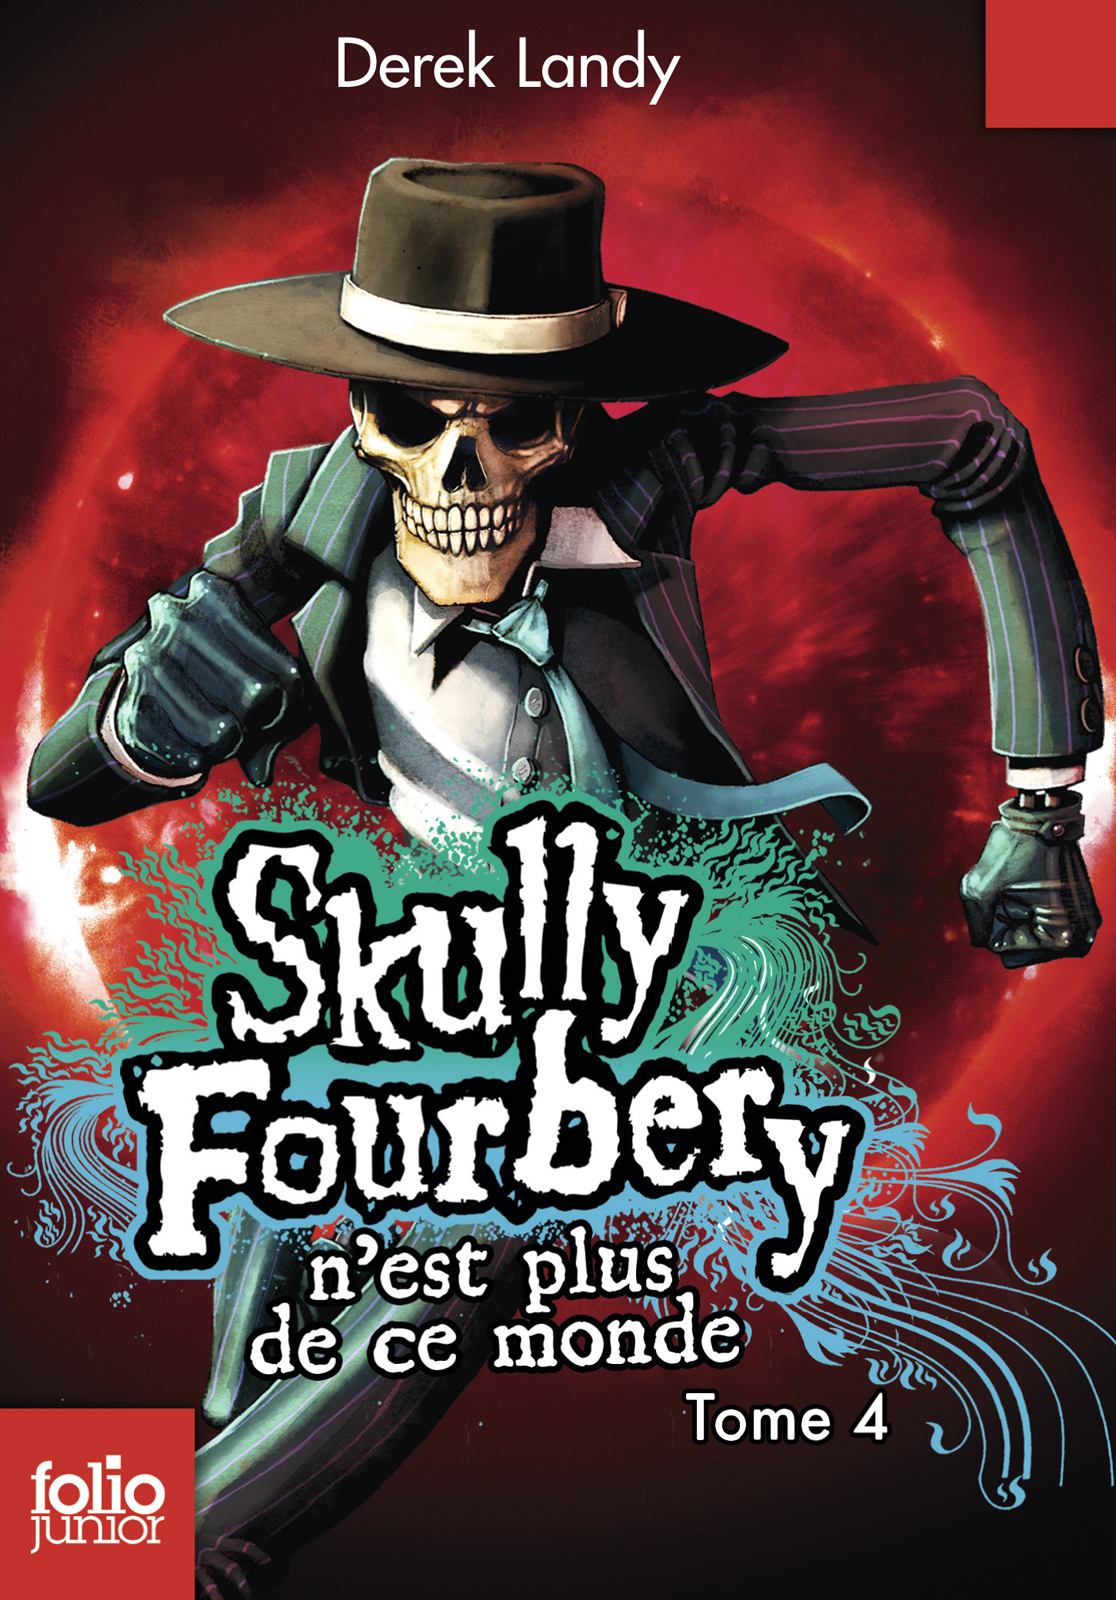 Skully Fourbery (Tome 4) - Skully Fourbery n'est plus de ce monde